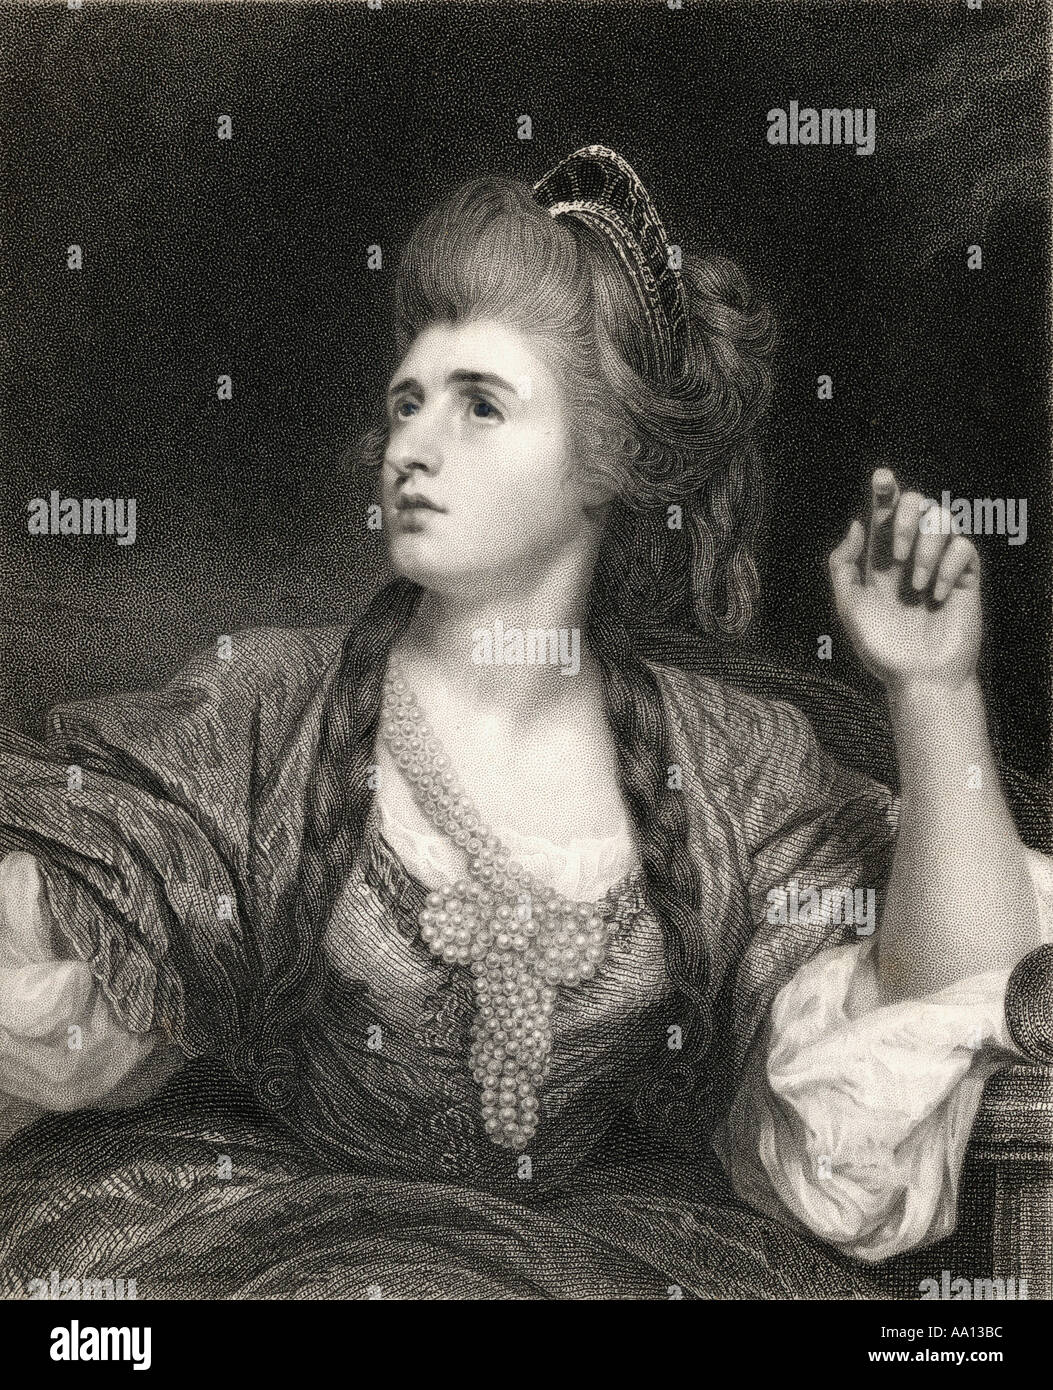 Sarah Siddons, née Kemble,1755 - 1831. One of the greatest English tragic actresses. Stock Photo